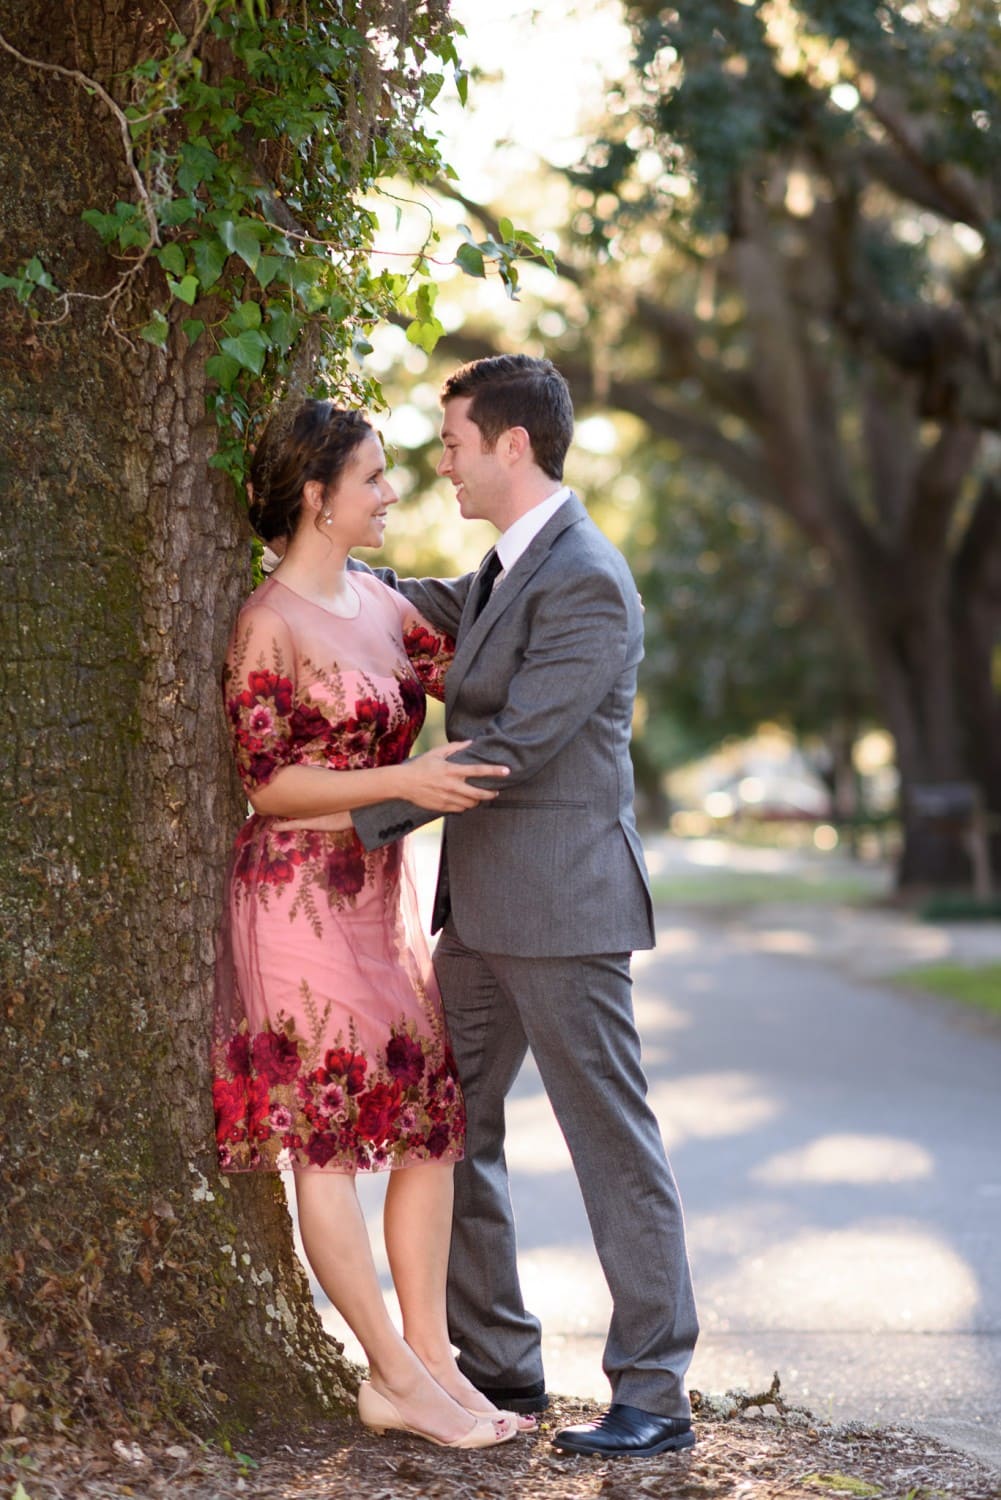 Couple leaning against the oak tree - Oak Street, Conway, SC